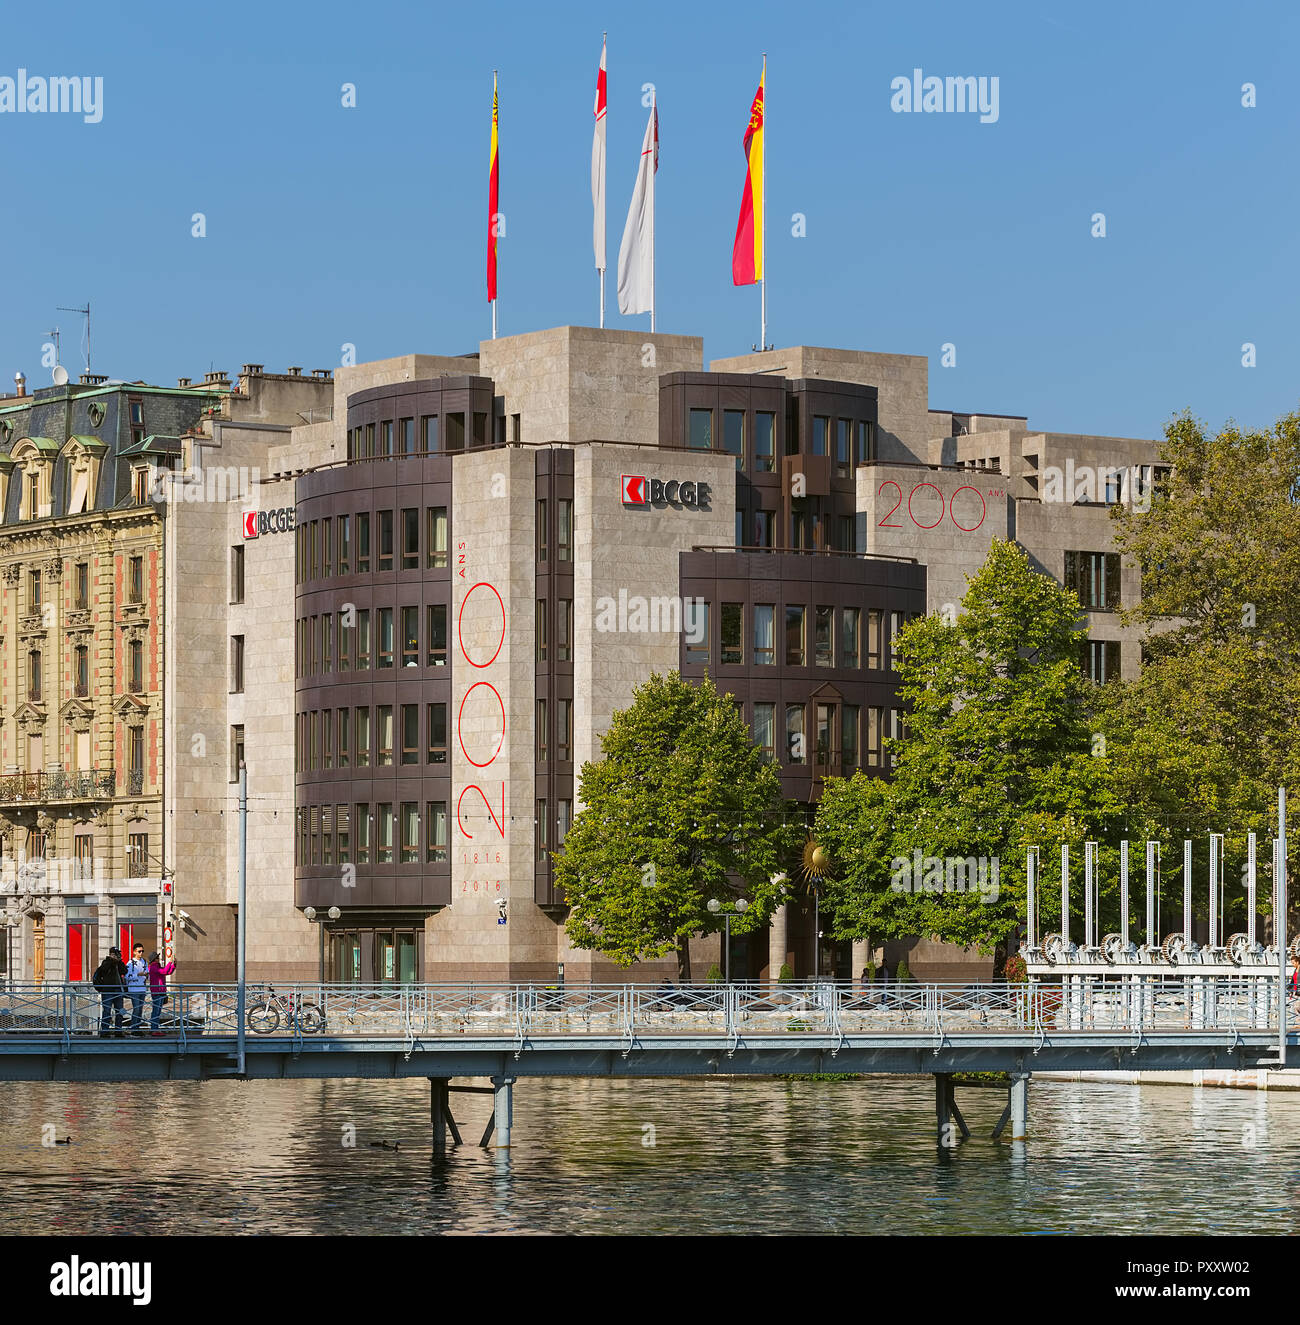 Geneva, Switzerland - September 24, 2016: people on a bridge over the Rhone river, building of the Cantonal Bank of Geneva in the background. Geneva i Stock Photo